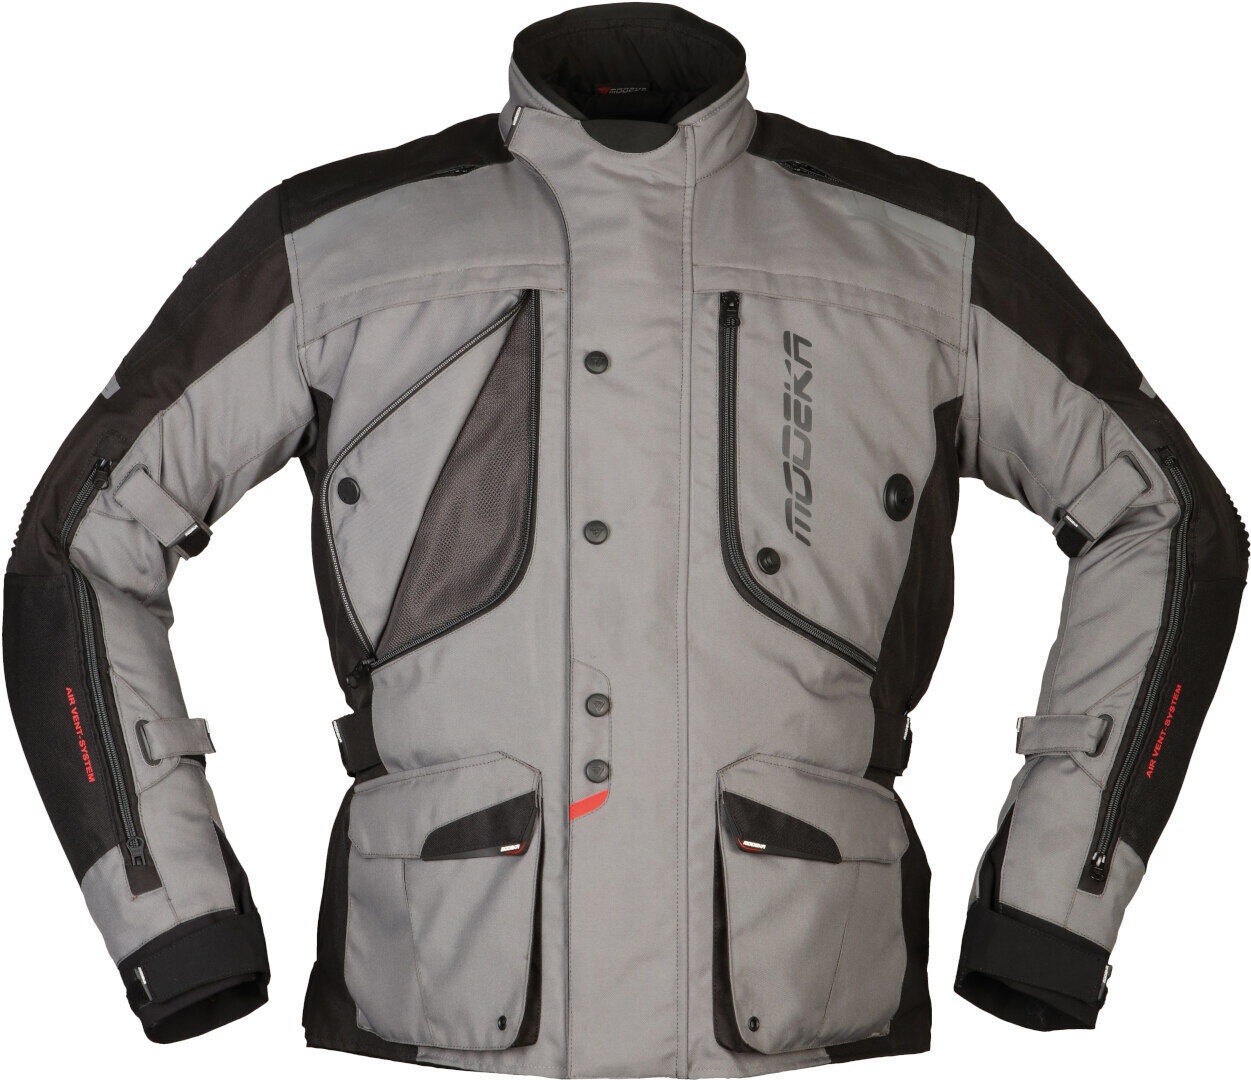 Modeka Aeris Motorcycle Textile Jacket  - Black Grey